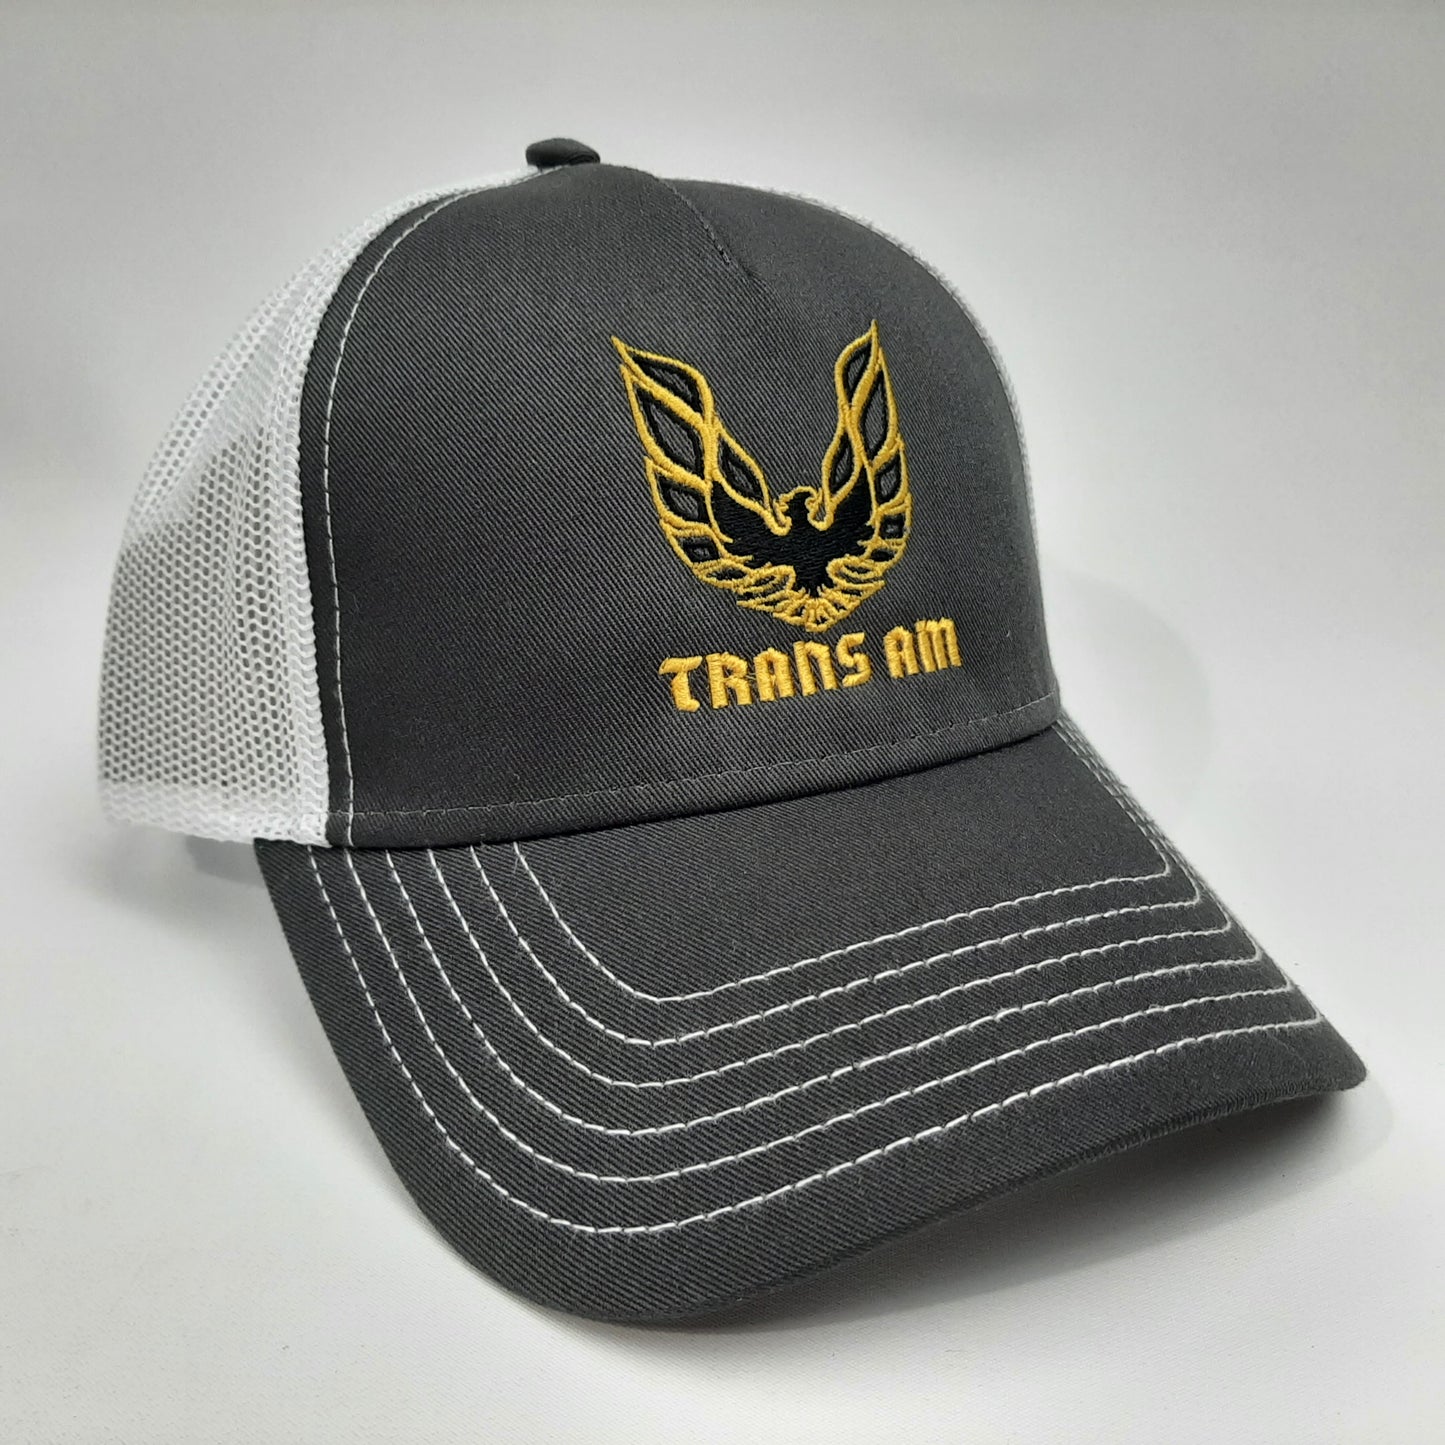 Trans Am Firebird Trucker Mesh Snapback Curved Bill Hat Cap Charcoal White